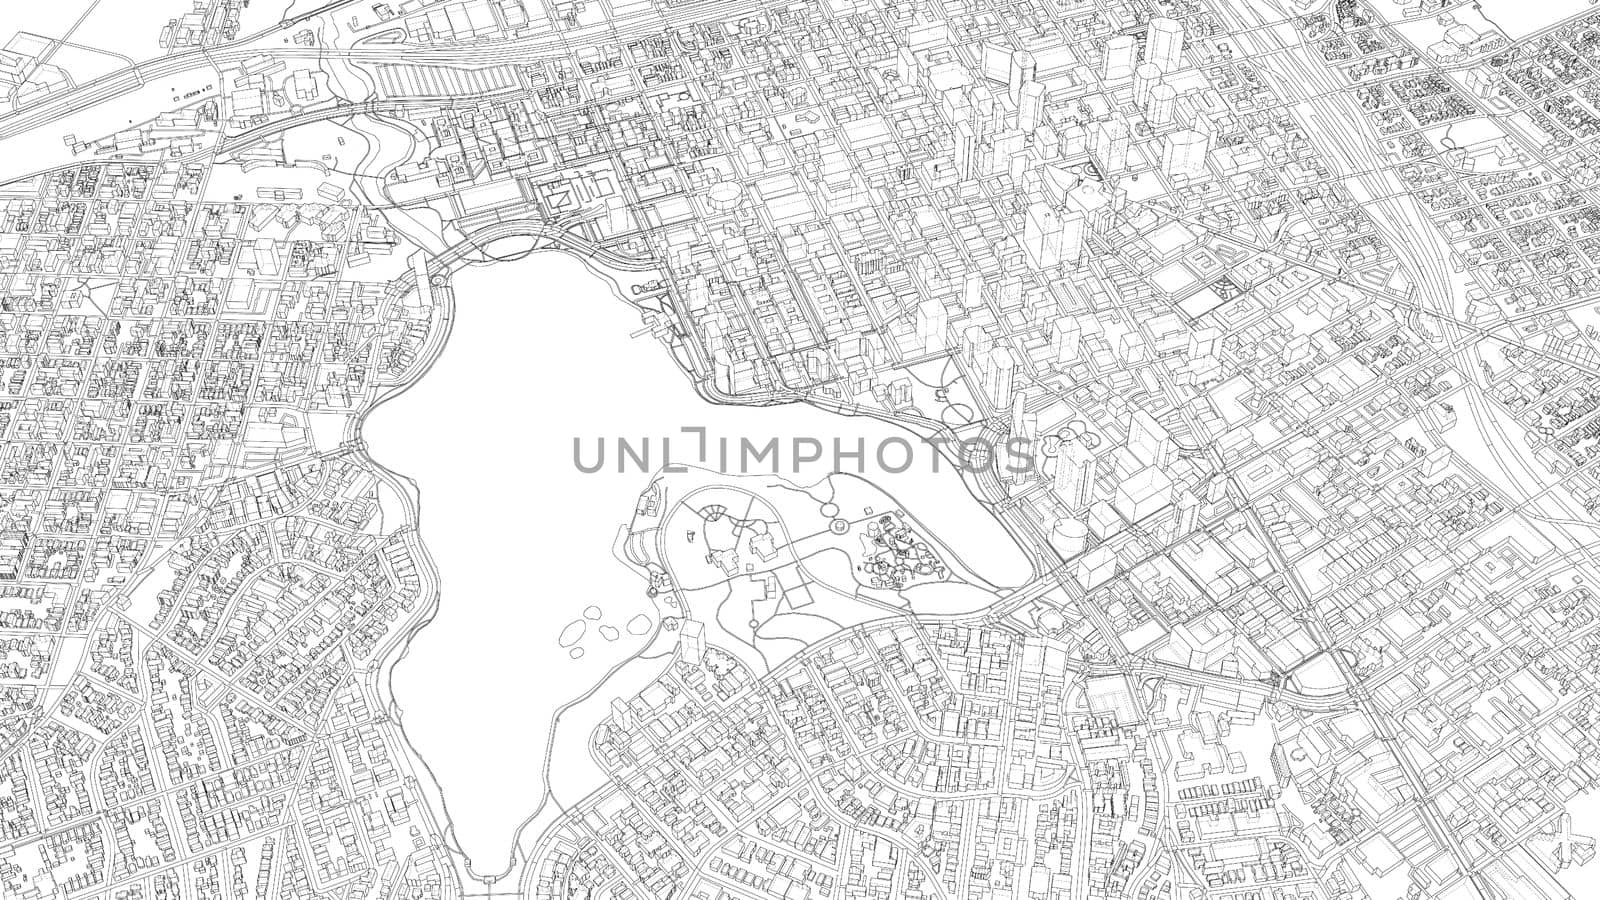 Cityscape Sketch. 3d illustration. Wire-frame style. Urban Architecture Concept